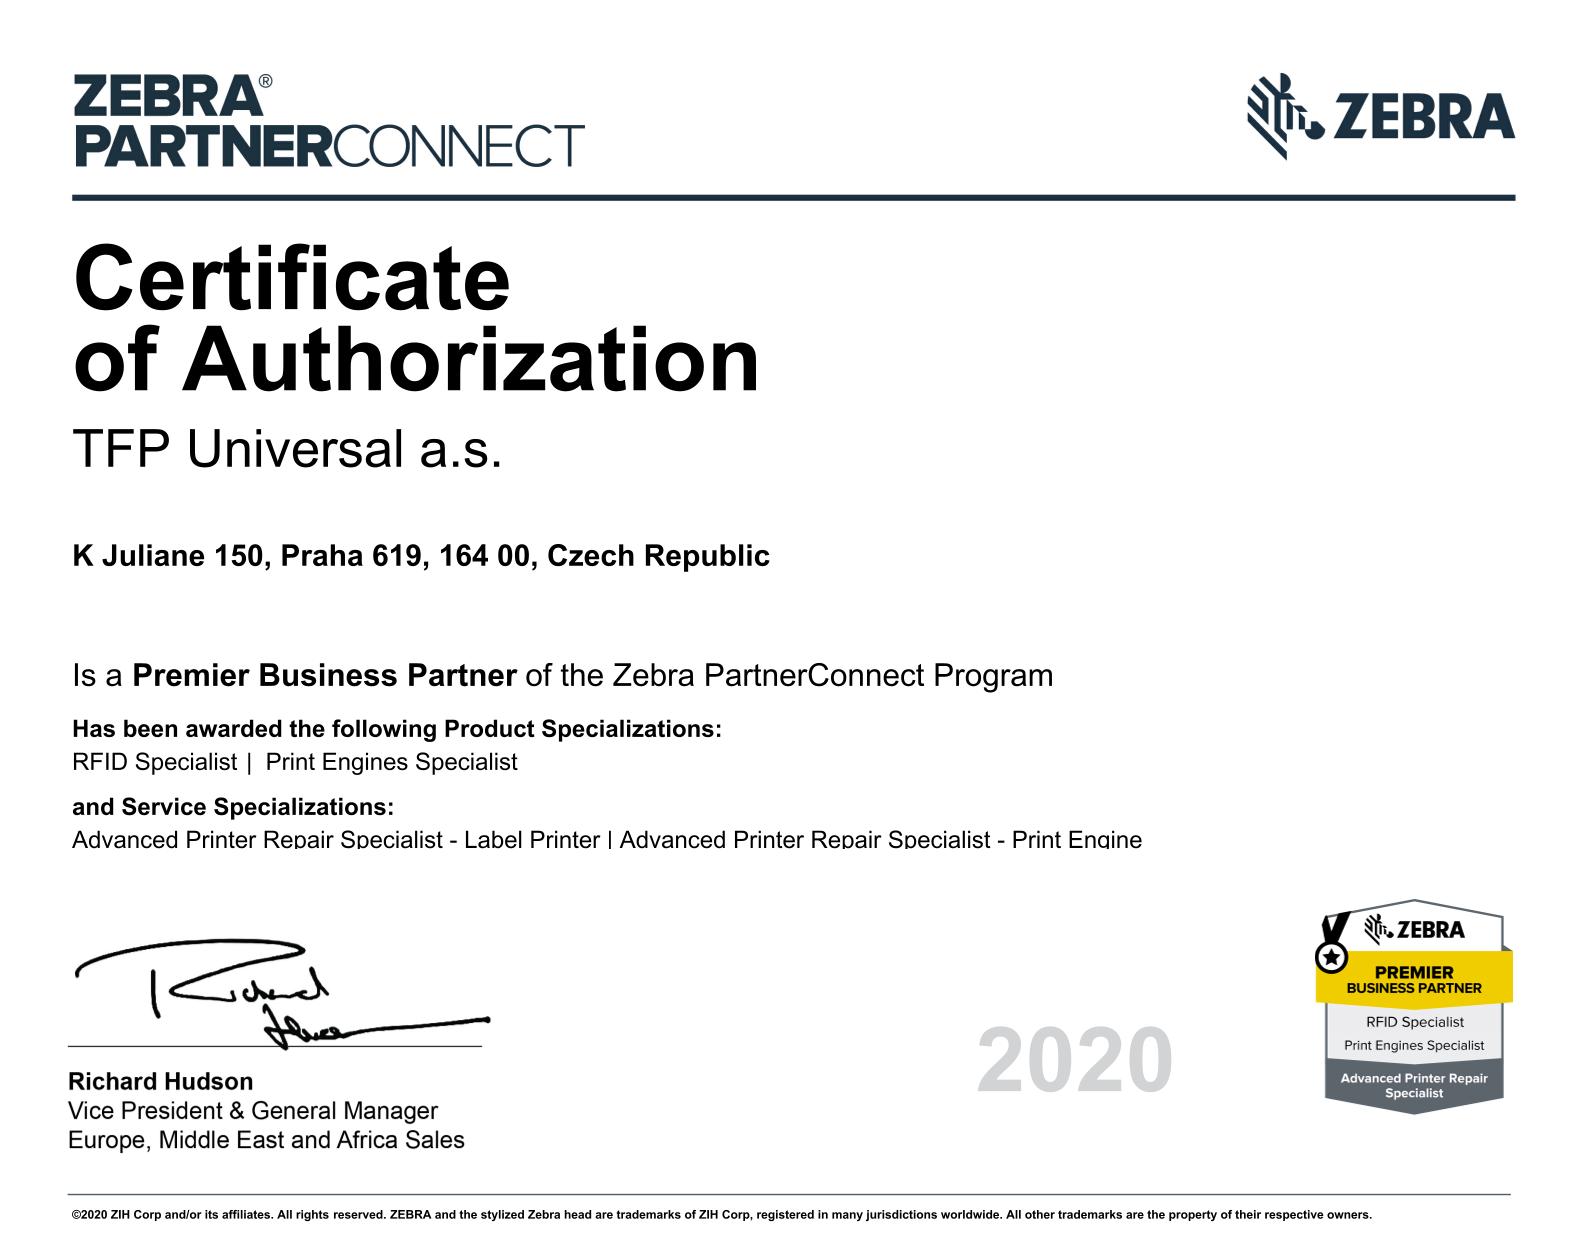 ZEBRA Certificate of Authorization 2020